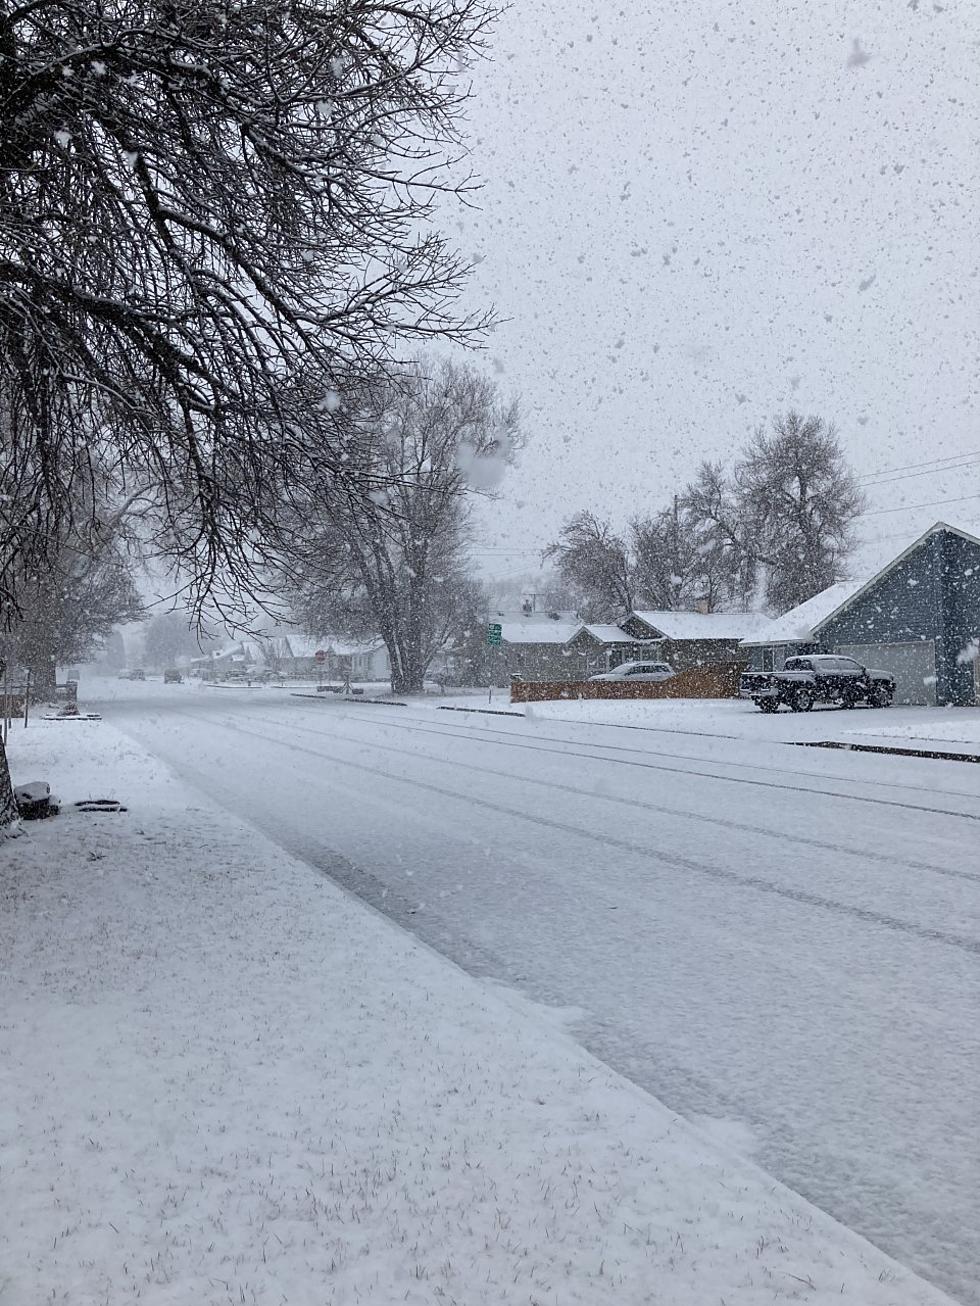 White Christmas for Many Parts of Idaho